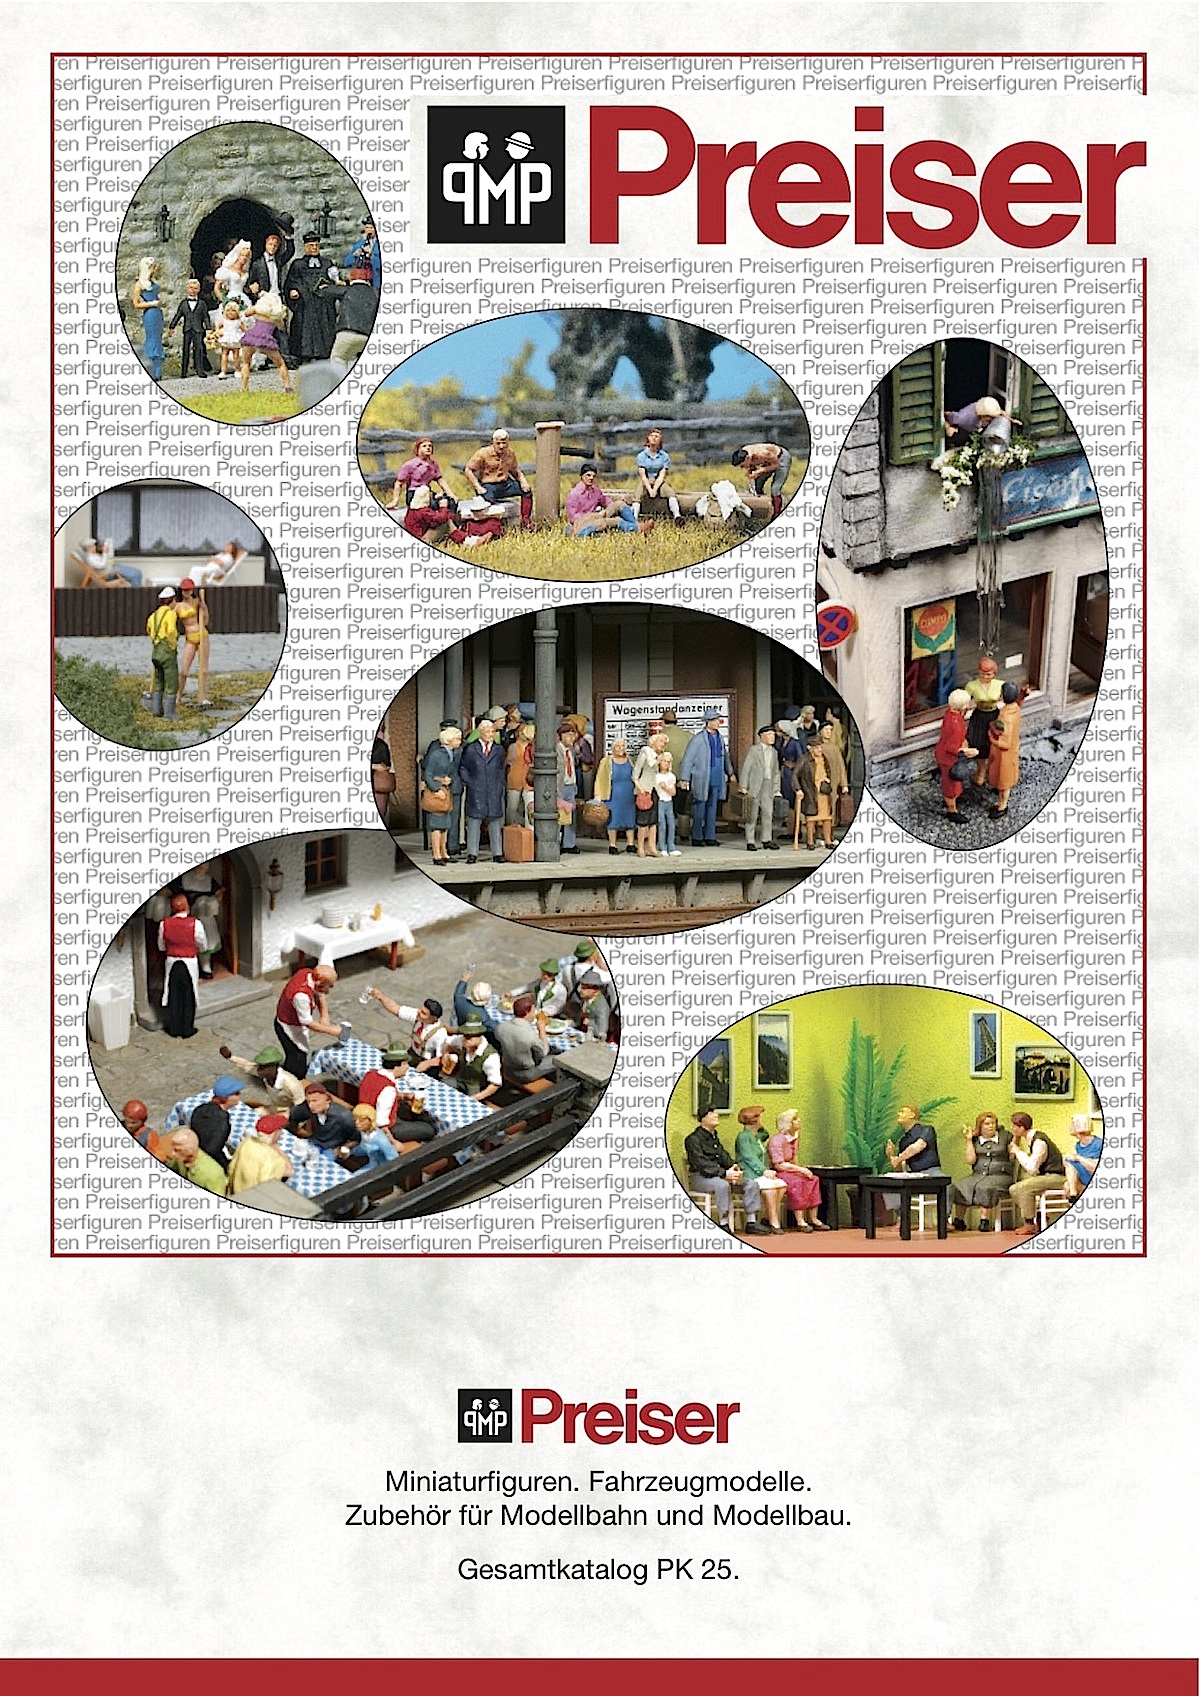 Preiser Katalog (Catalogue) 2012, PK-25